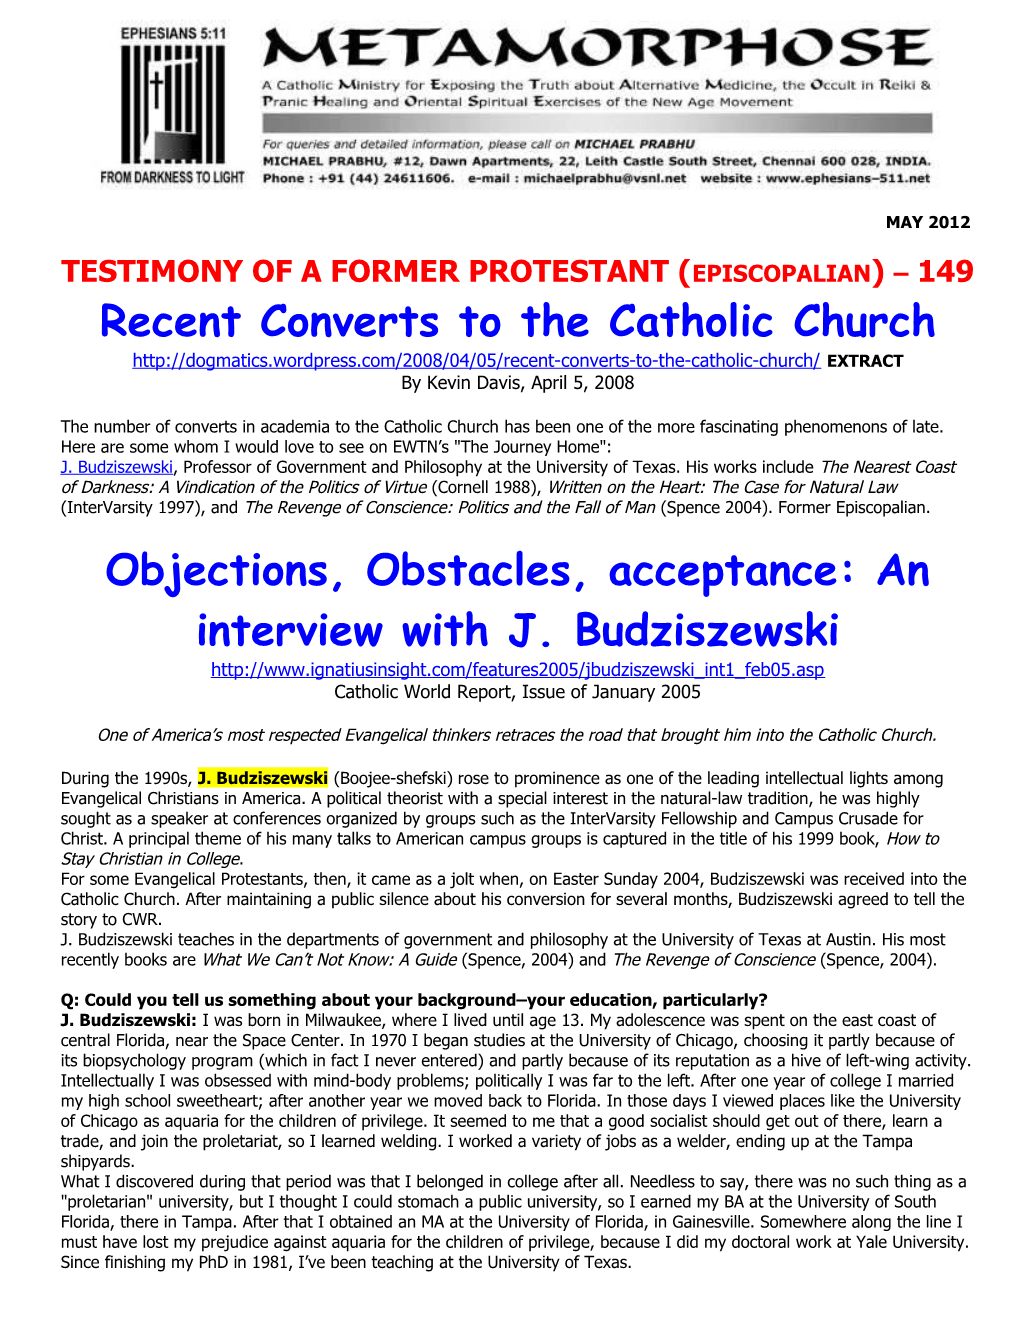 Testimony of a Former Protestant (Episcopalian) 149